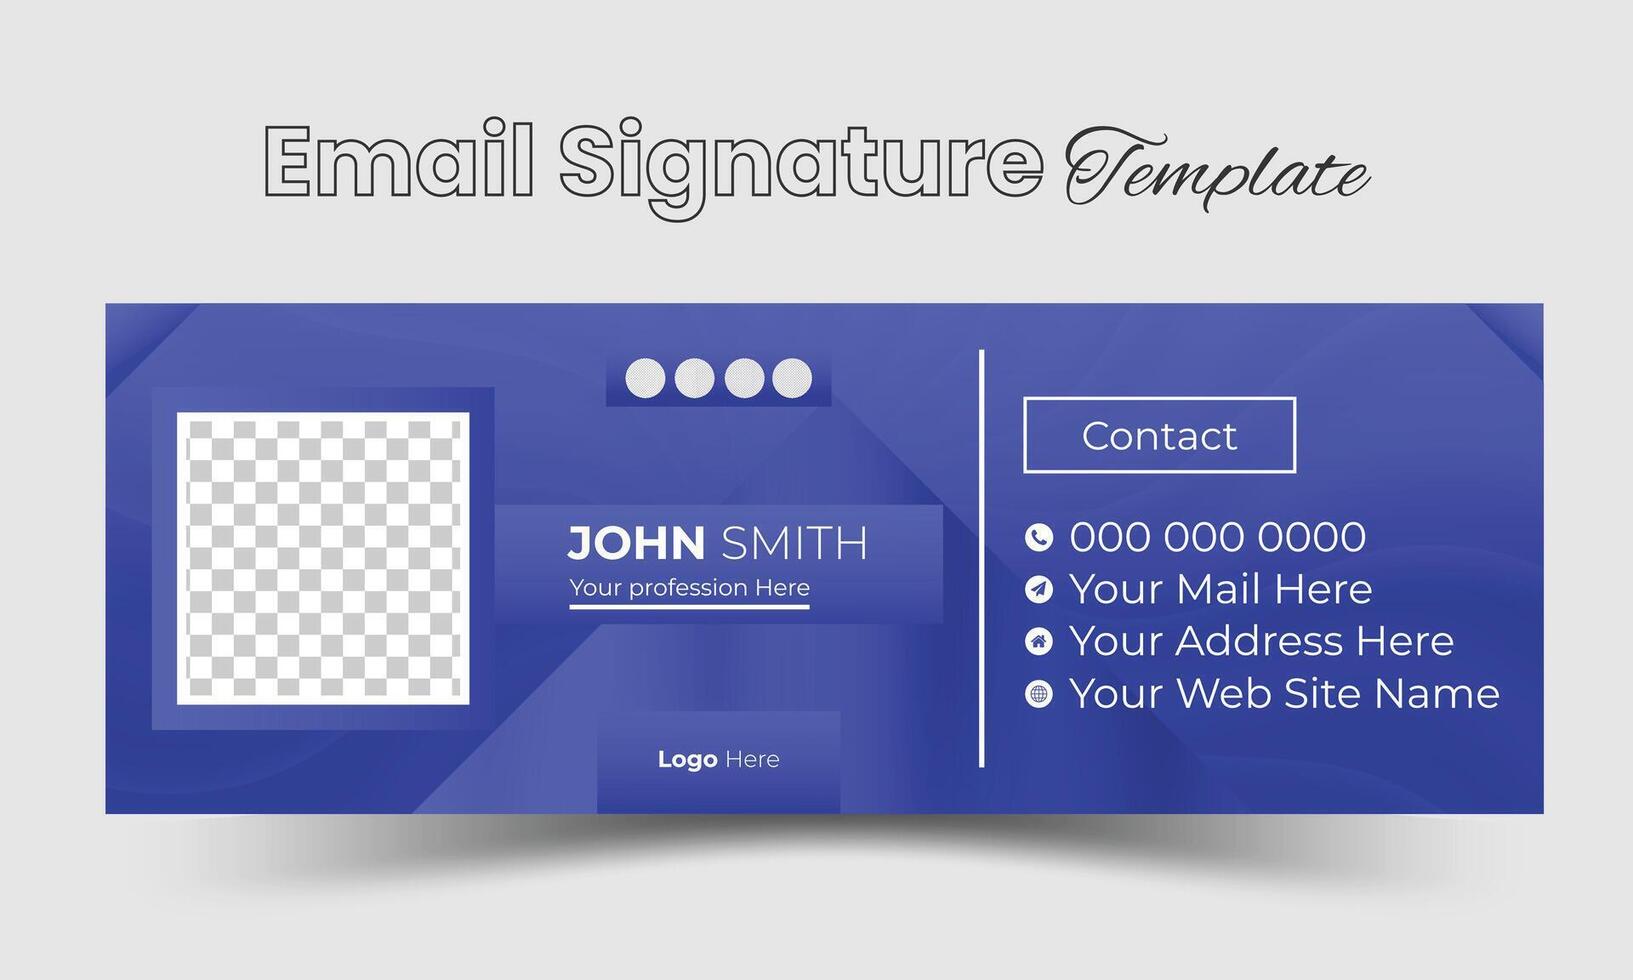 Corporate Modern Email Signature Design template. Email signature template design vector